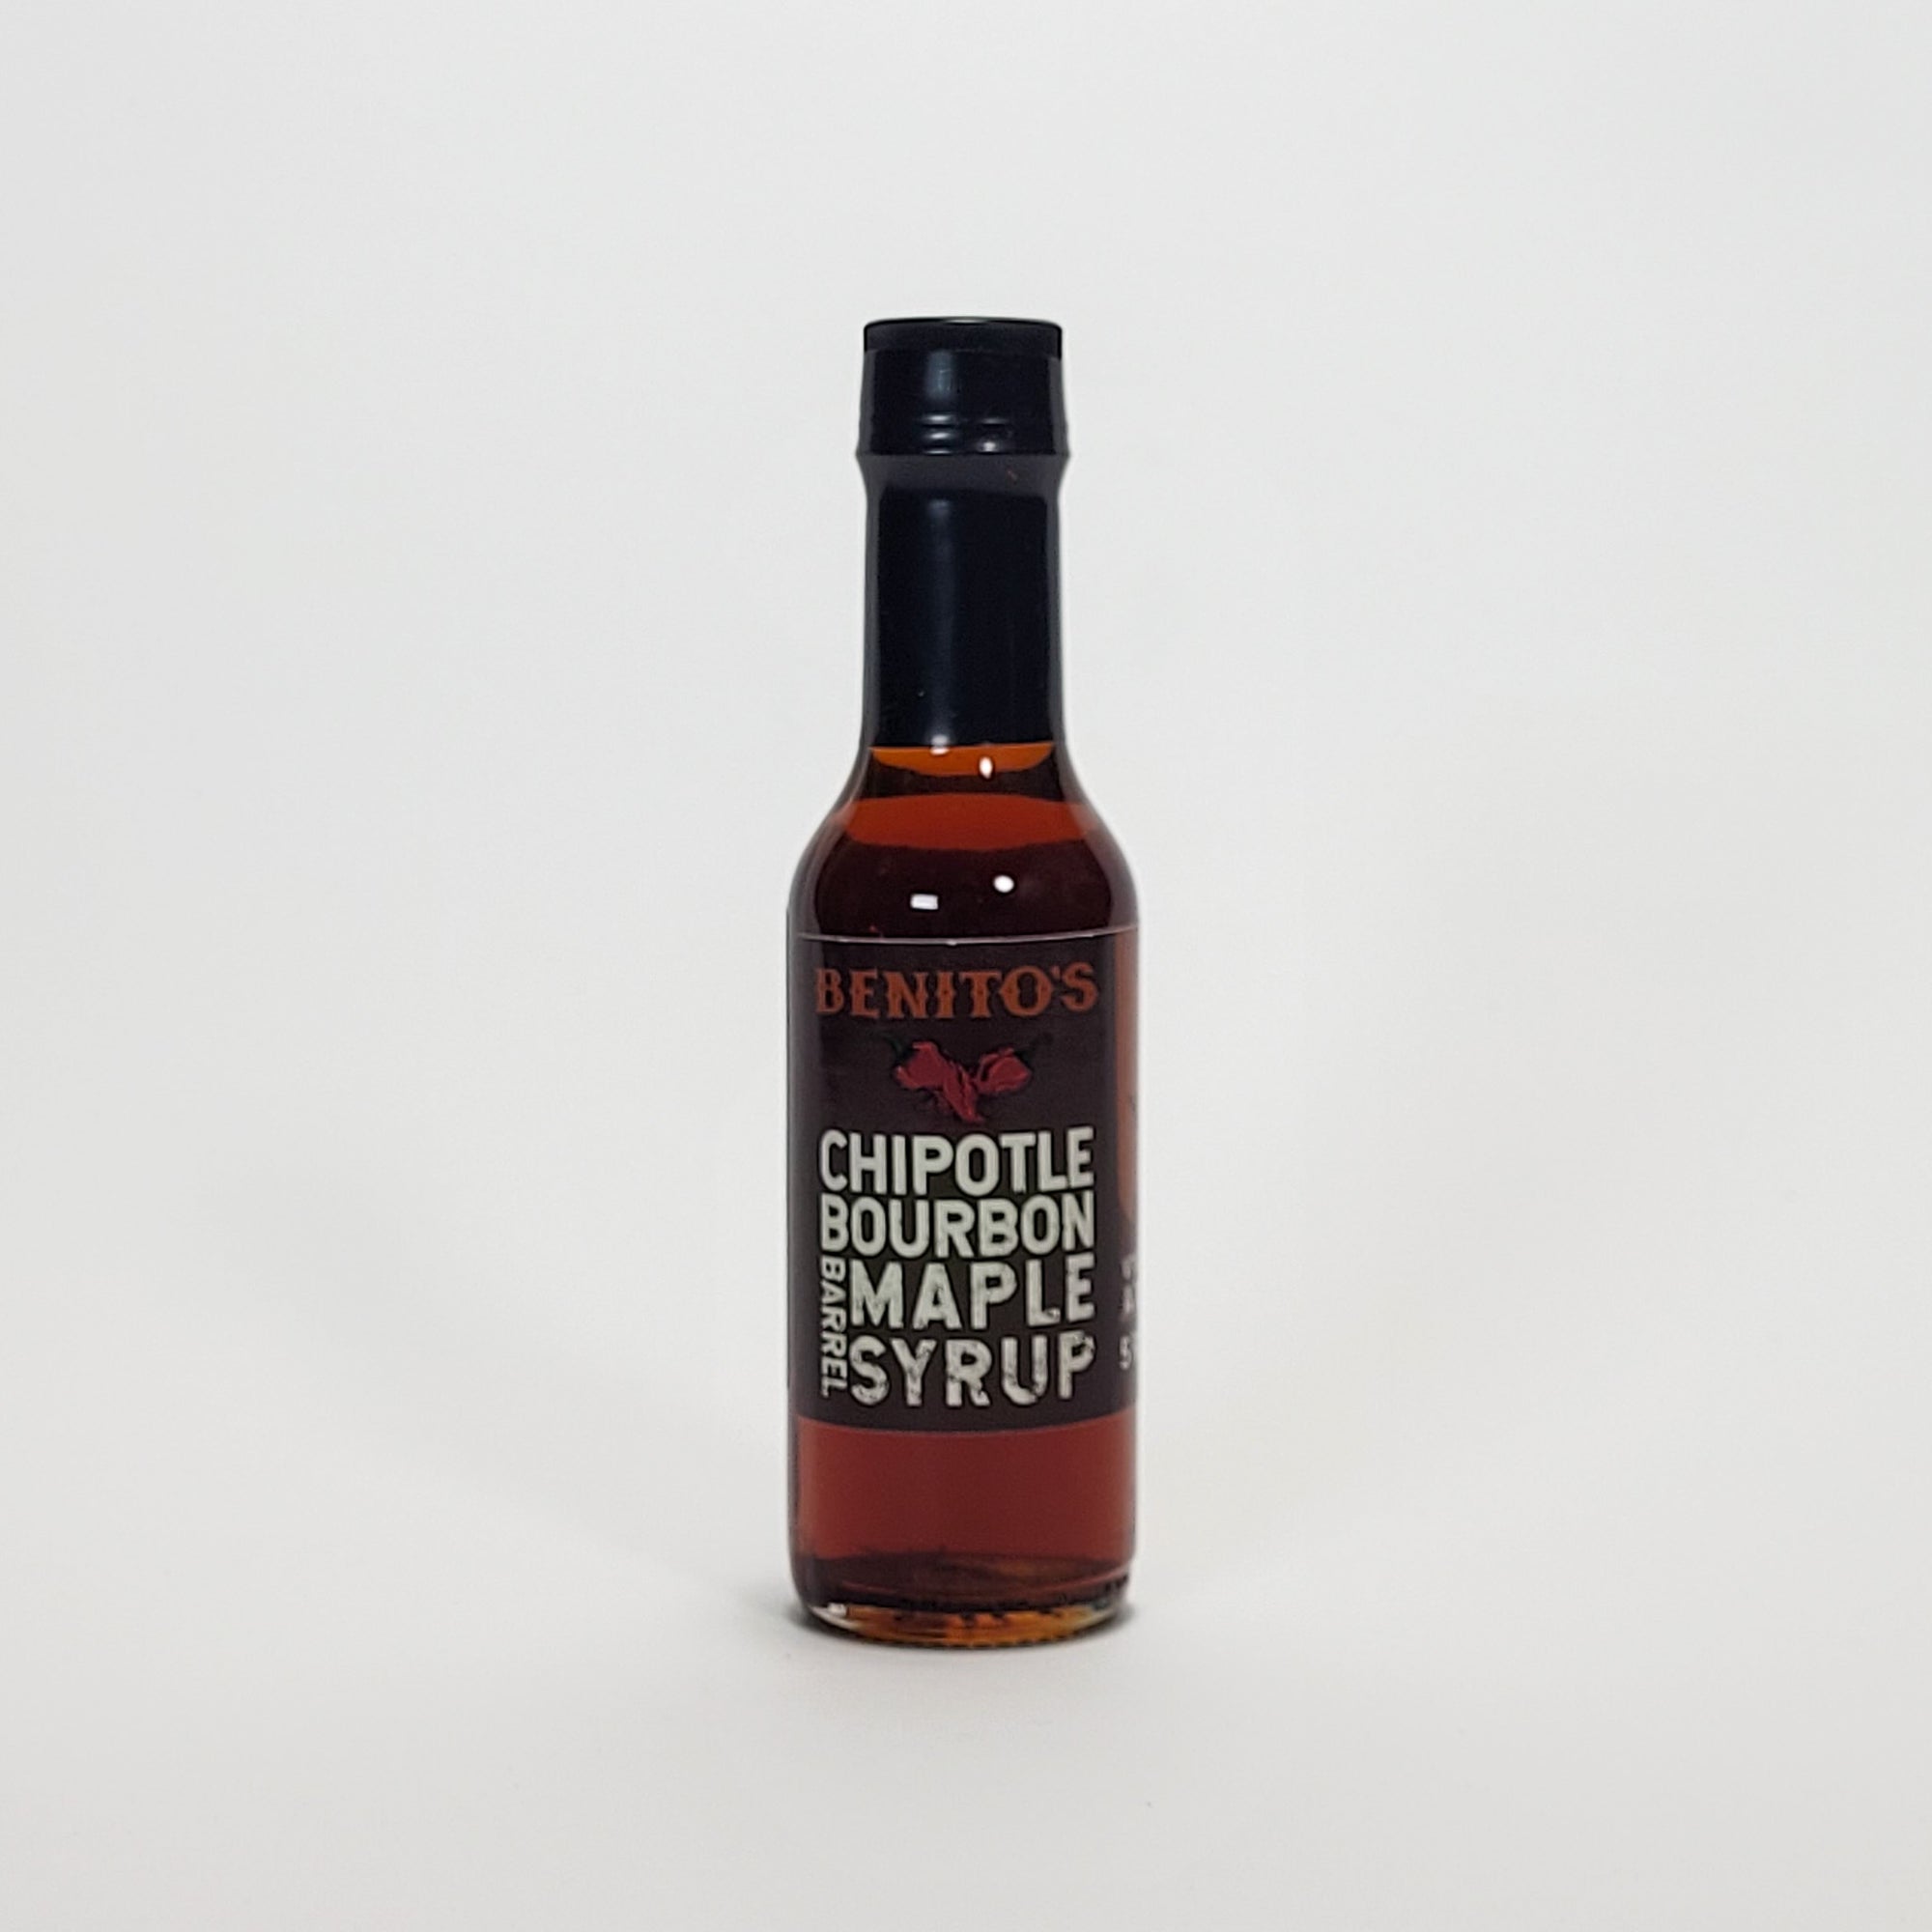 Benito's Chipotle Bourbon Barrel Maple Syrup hot sauce